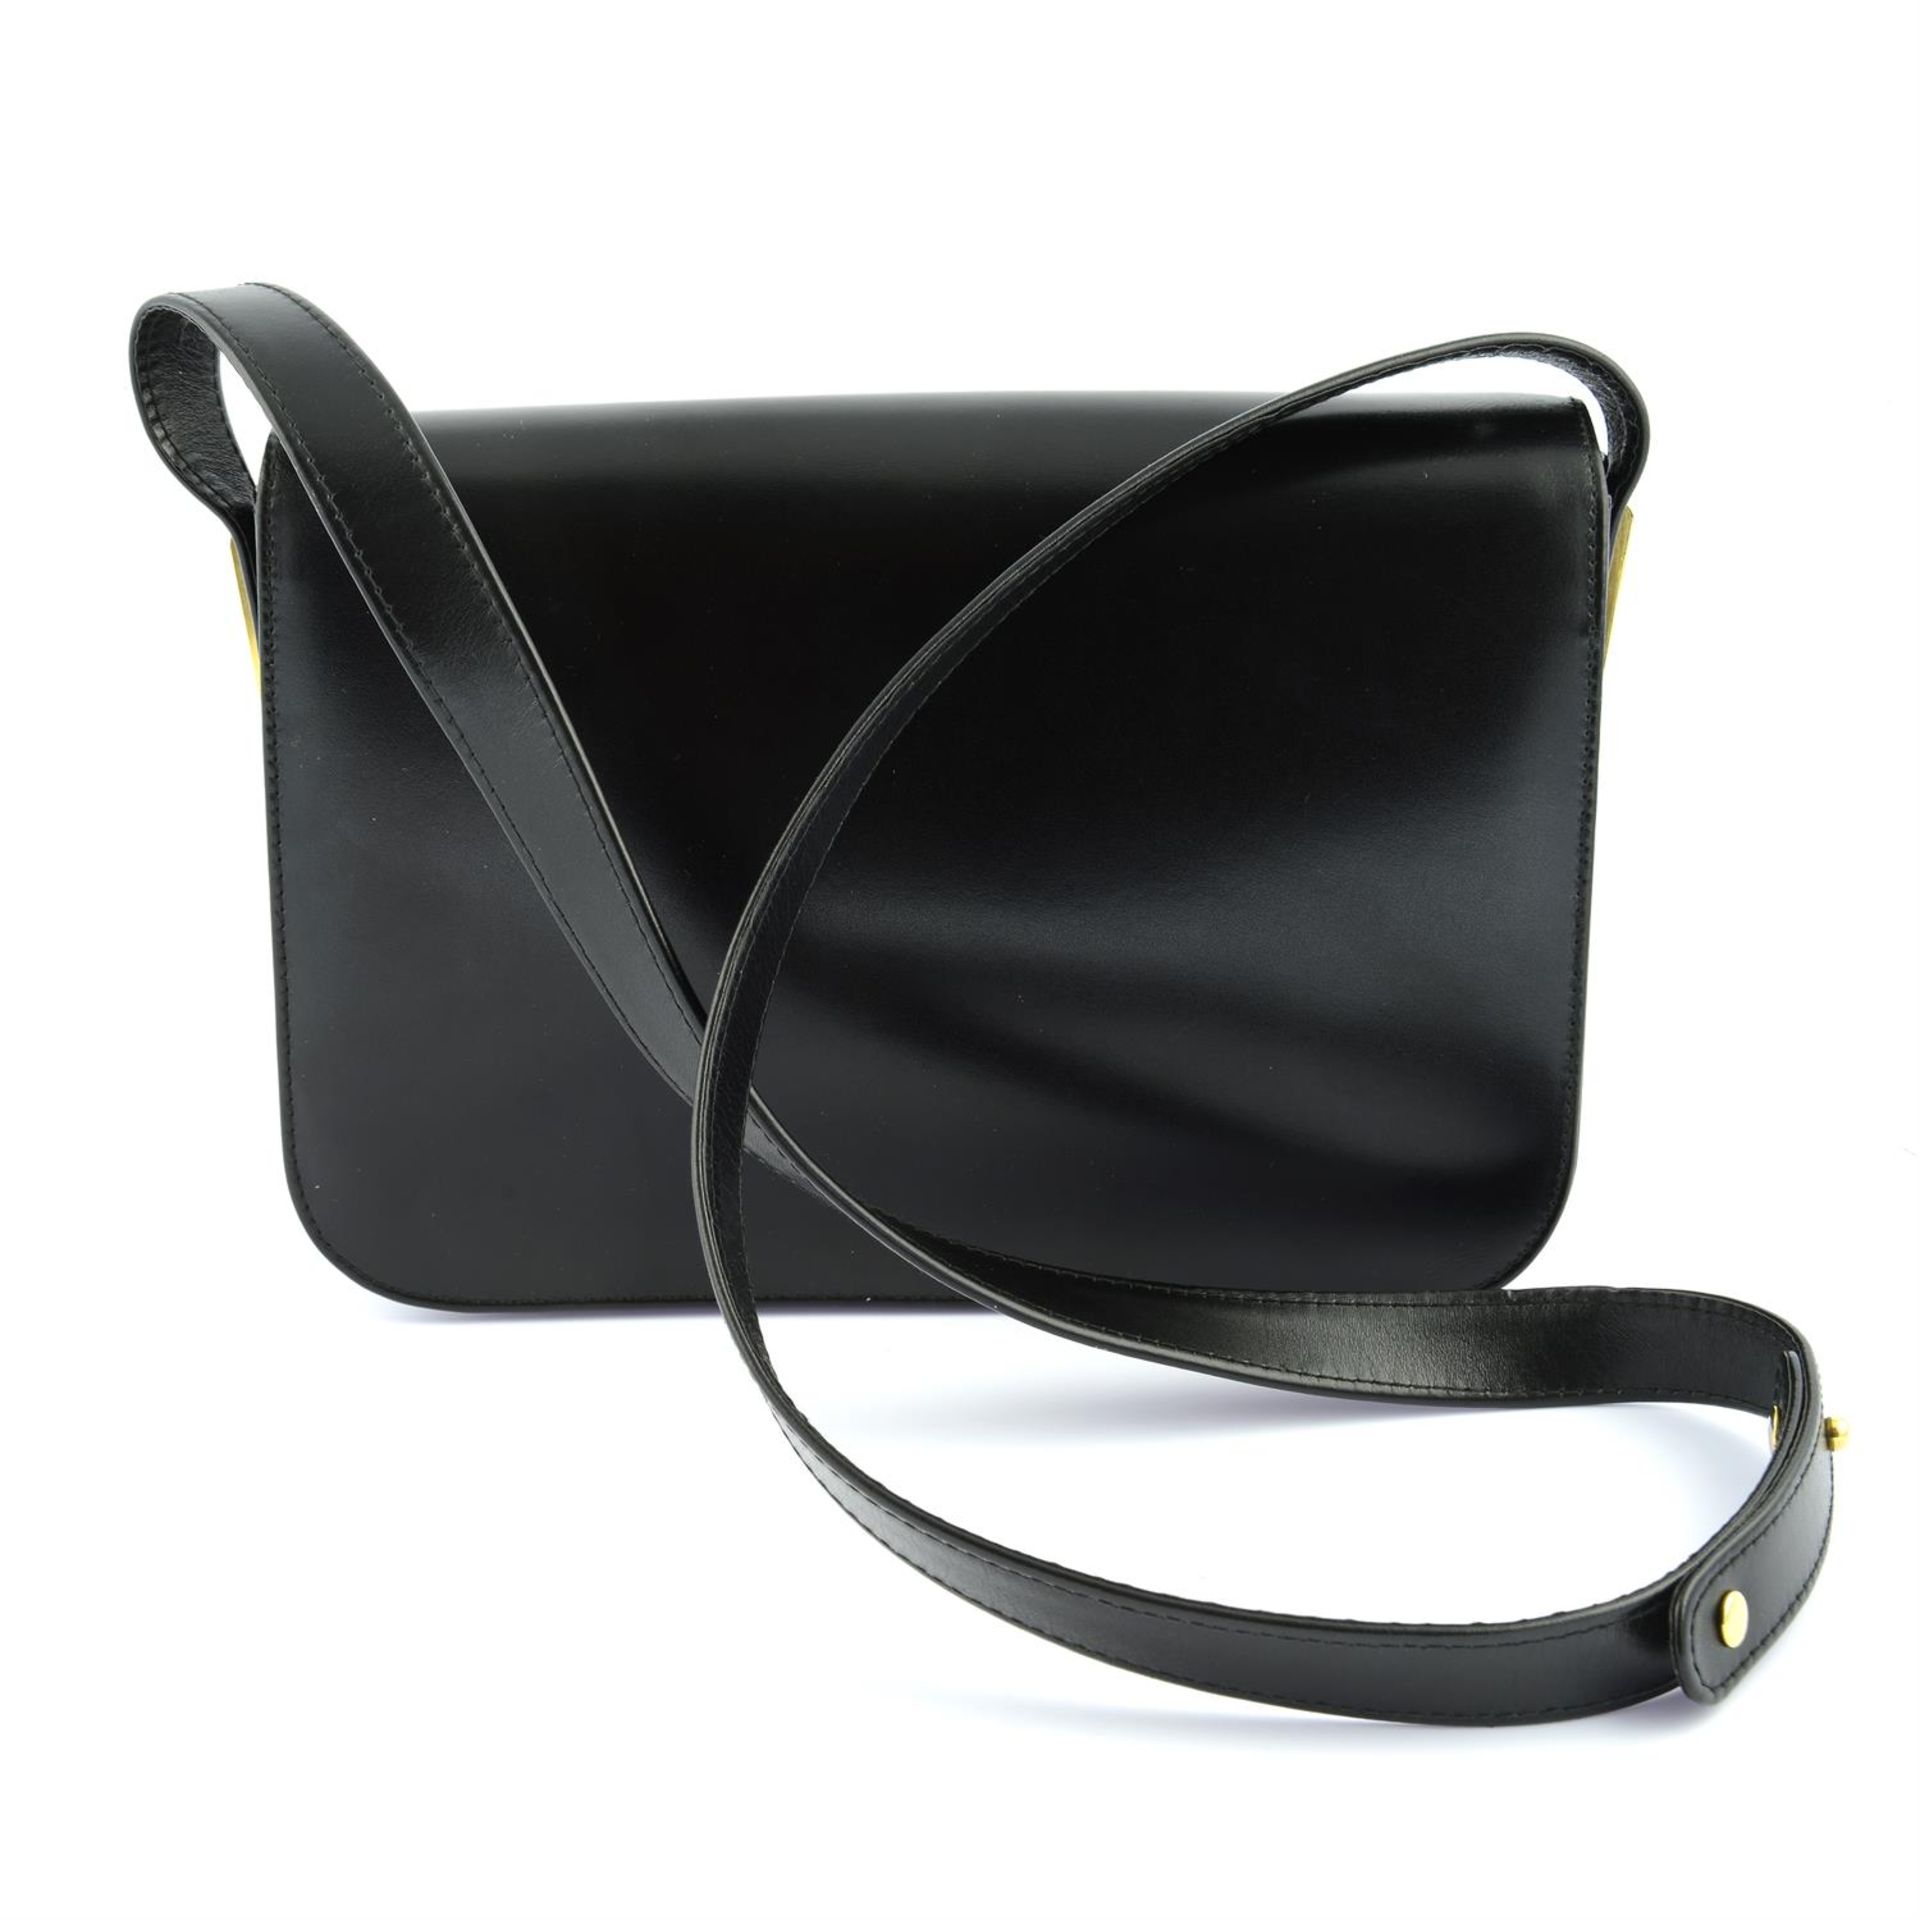 AQUASCUTUM - A black leather shoulder bag. - Bild 2 aus 4